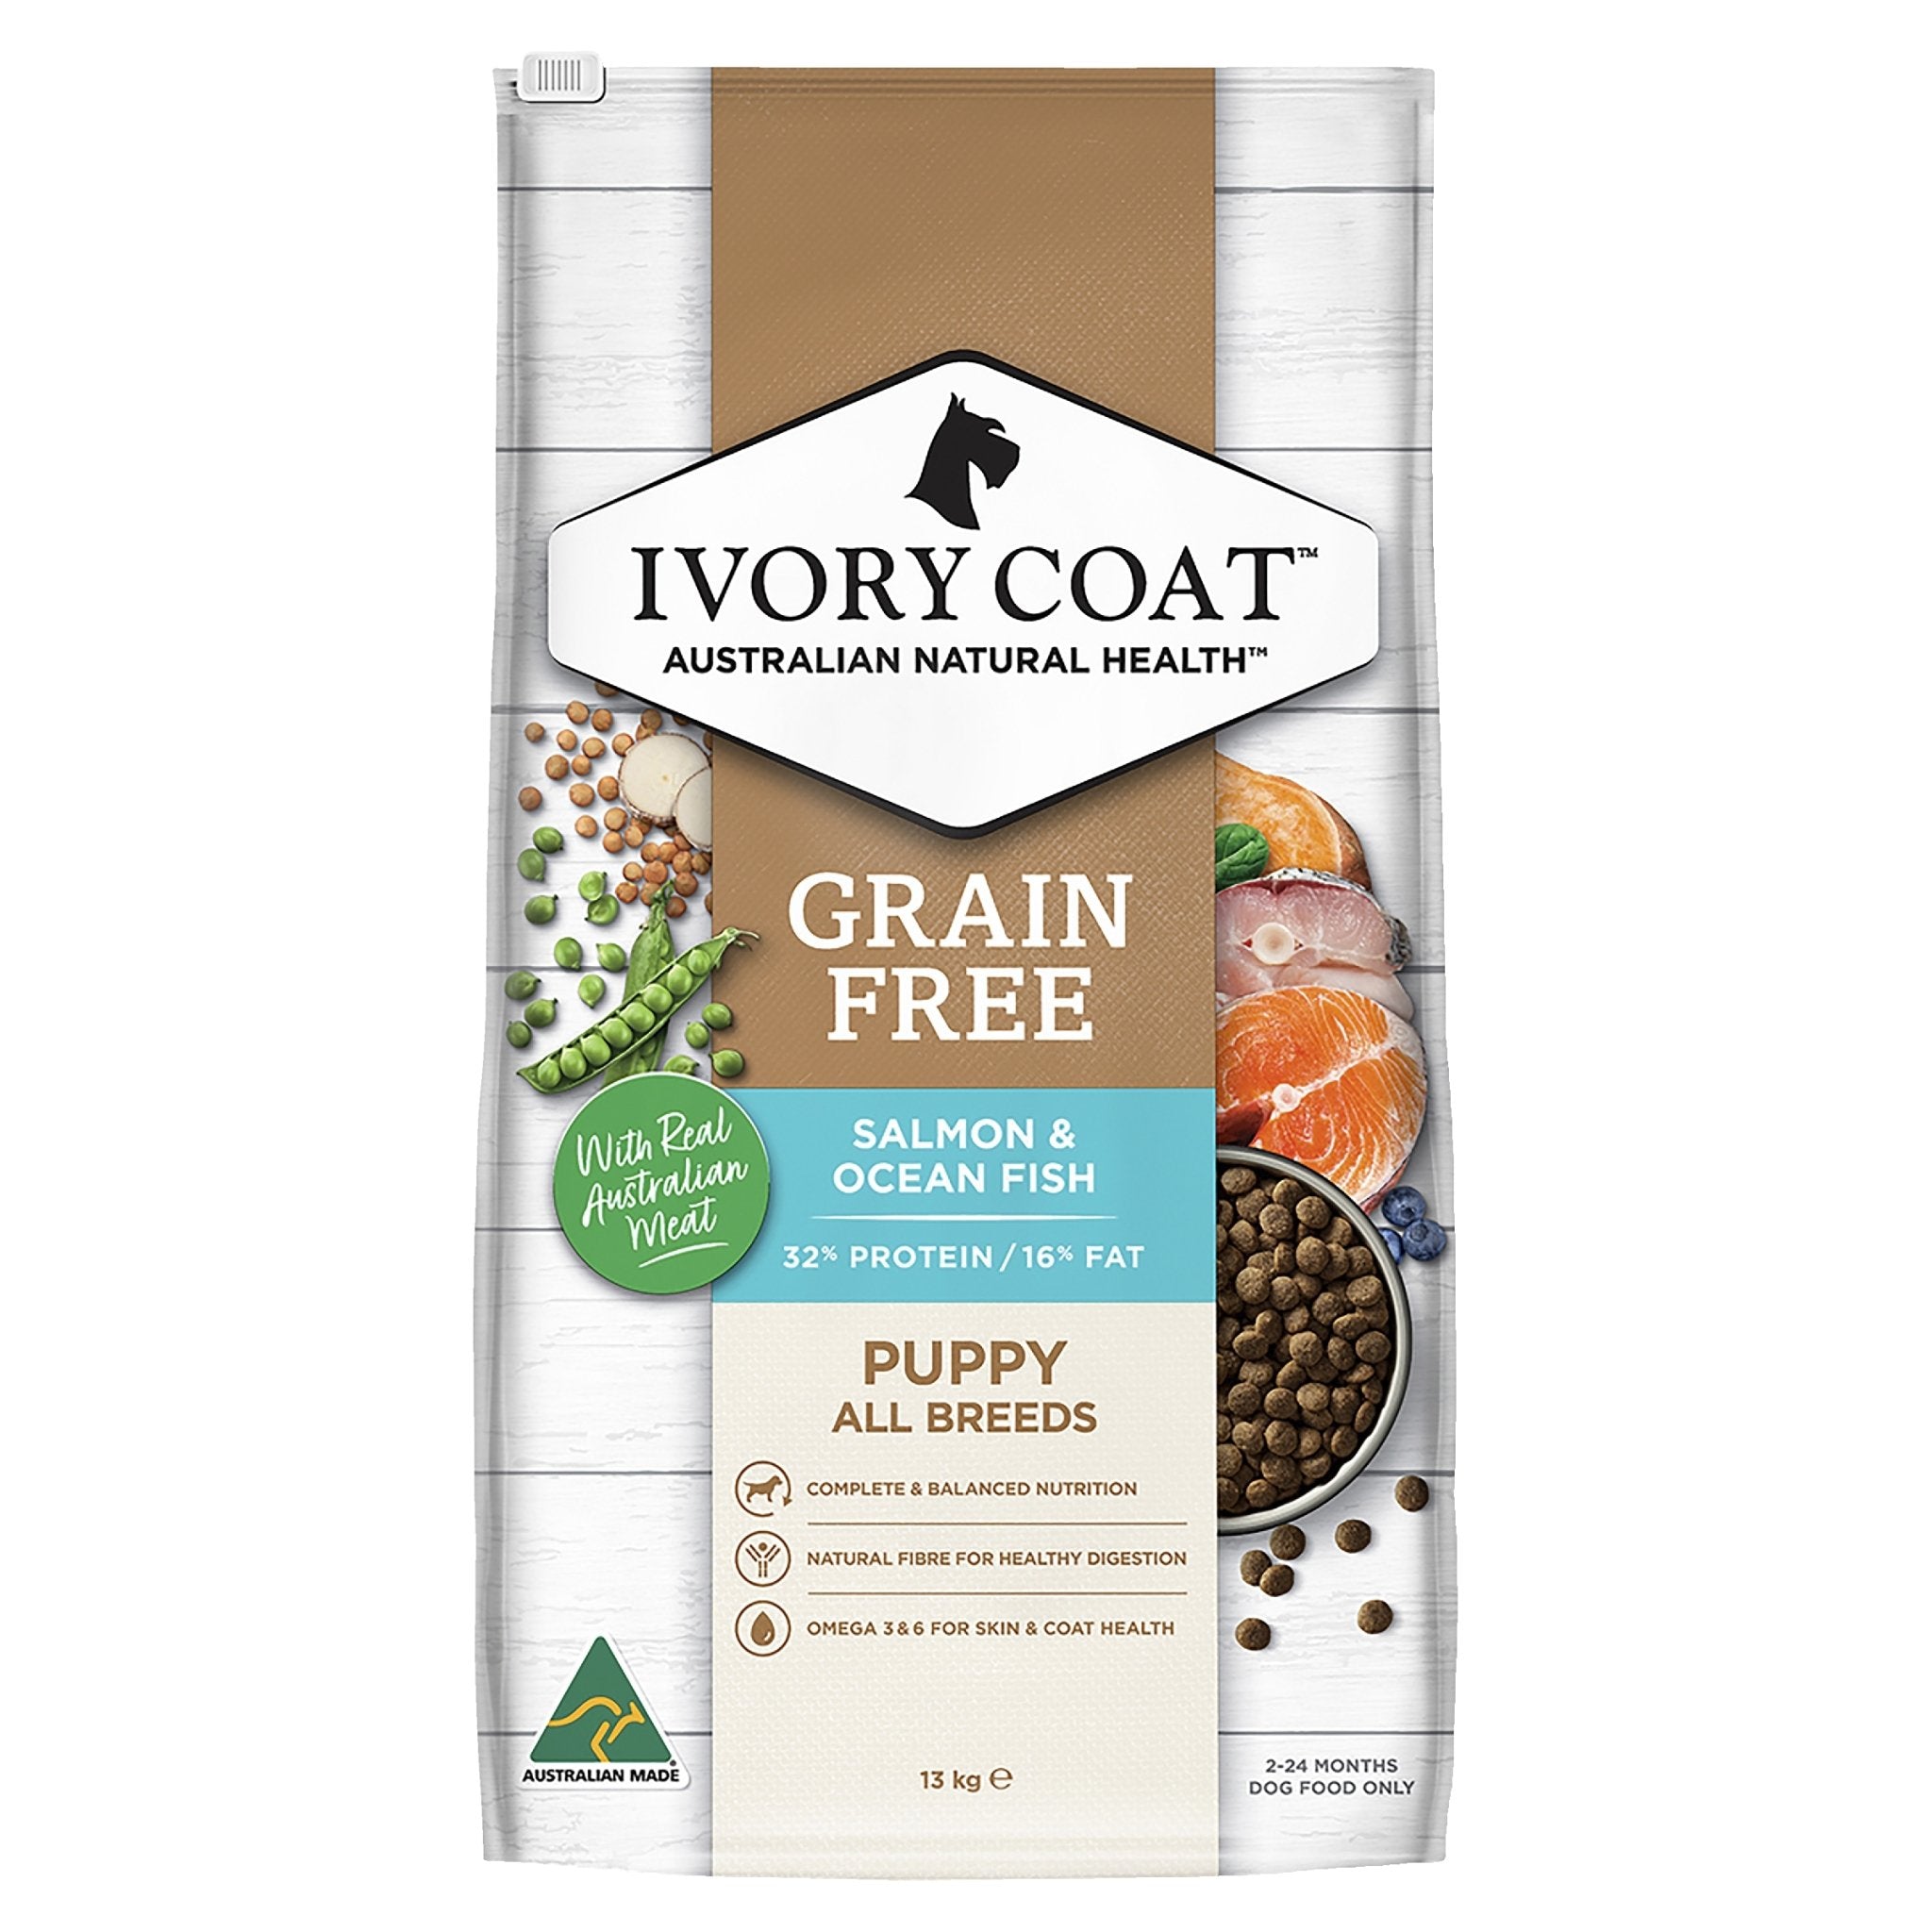 Ivory Coat Grain Free Puppy Salmon & Ocean Fish